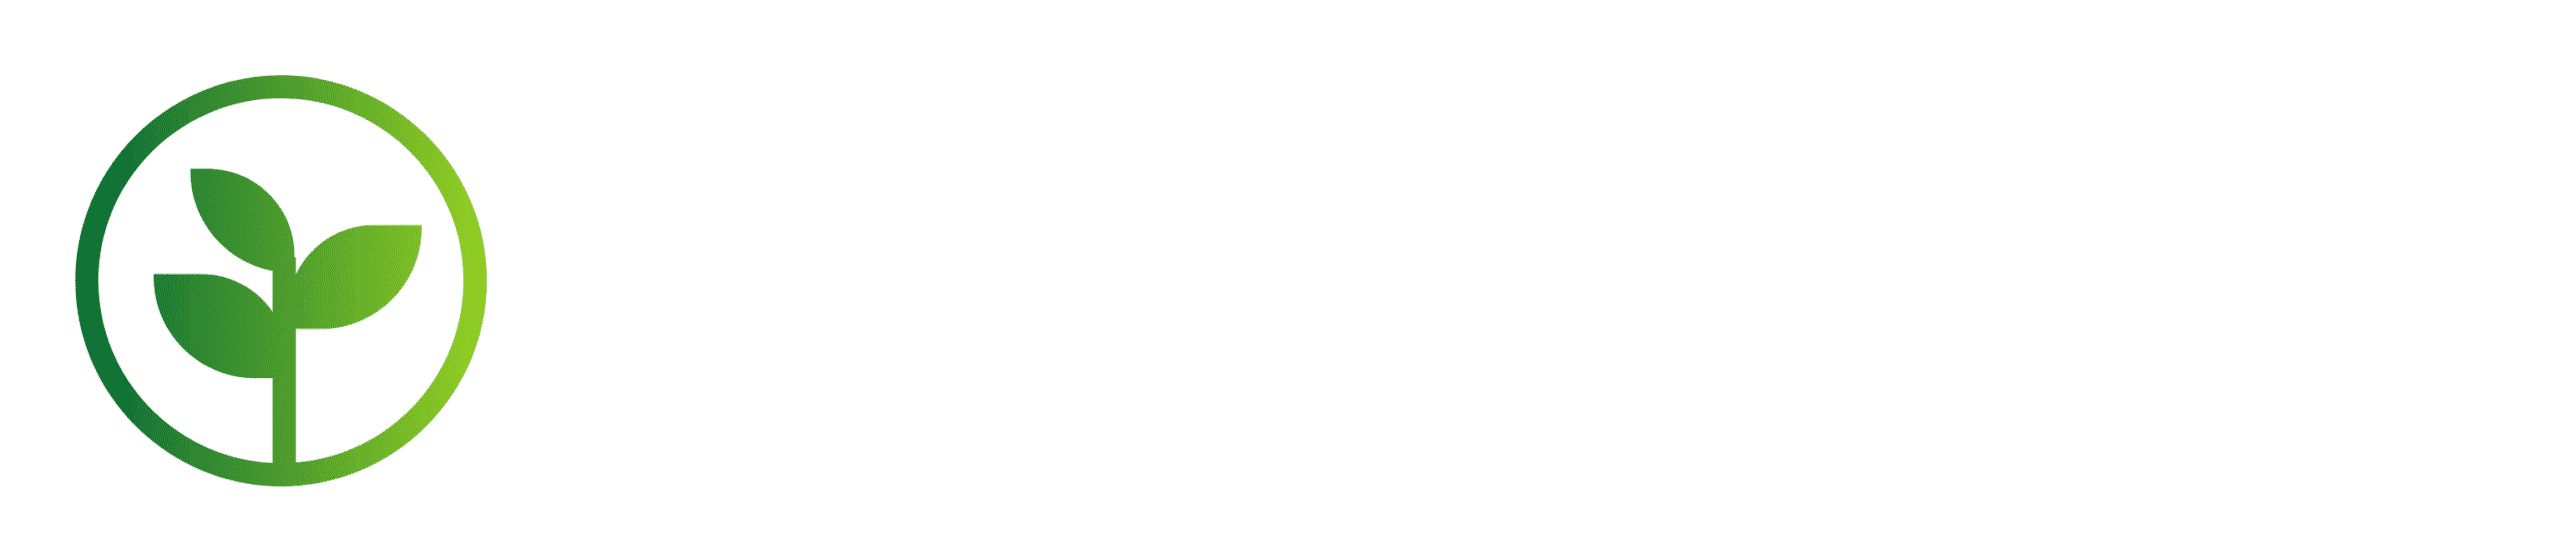 Well Living Initiative Logo